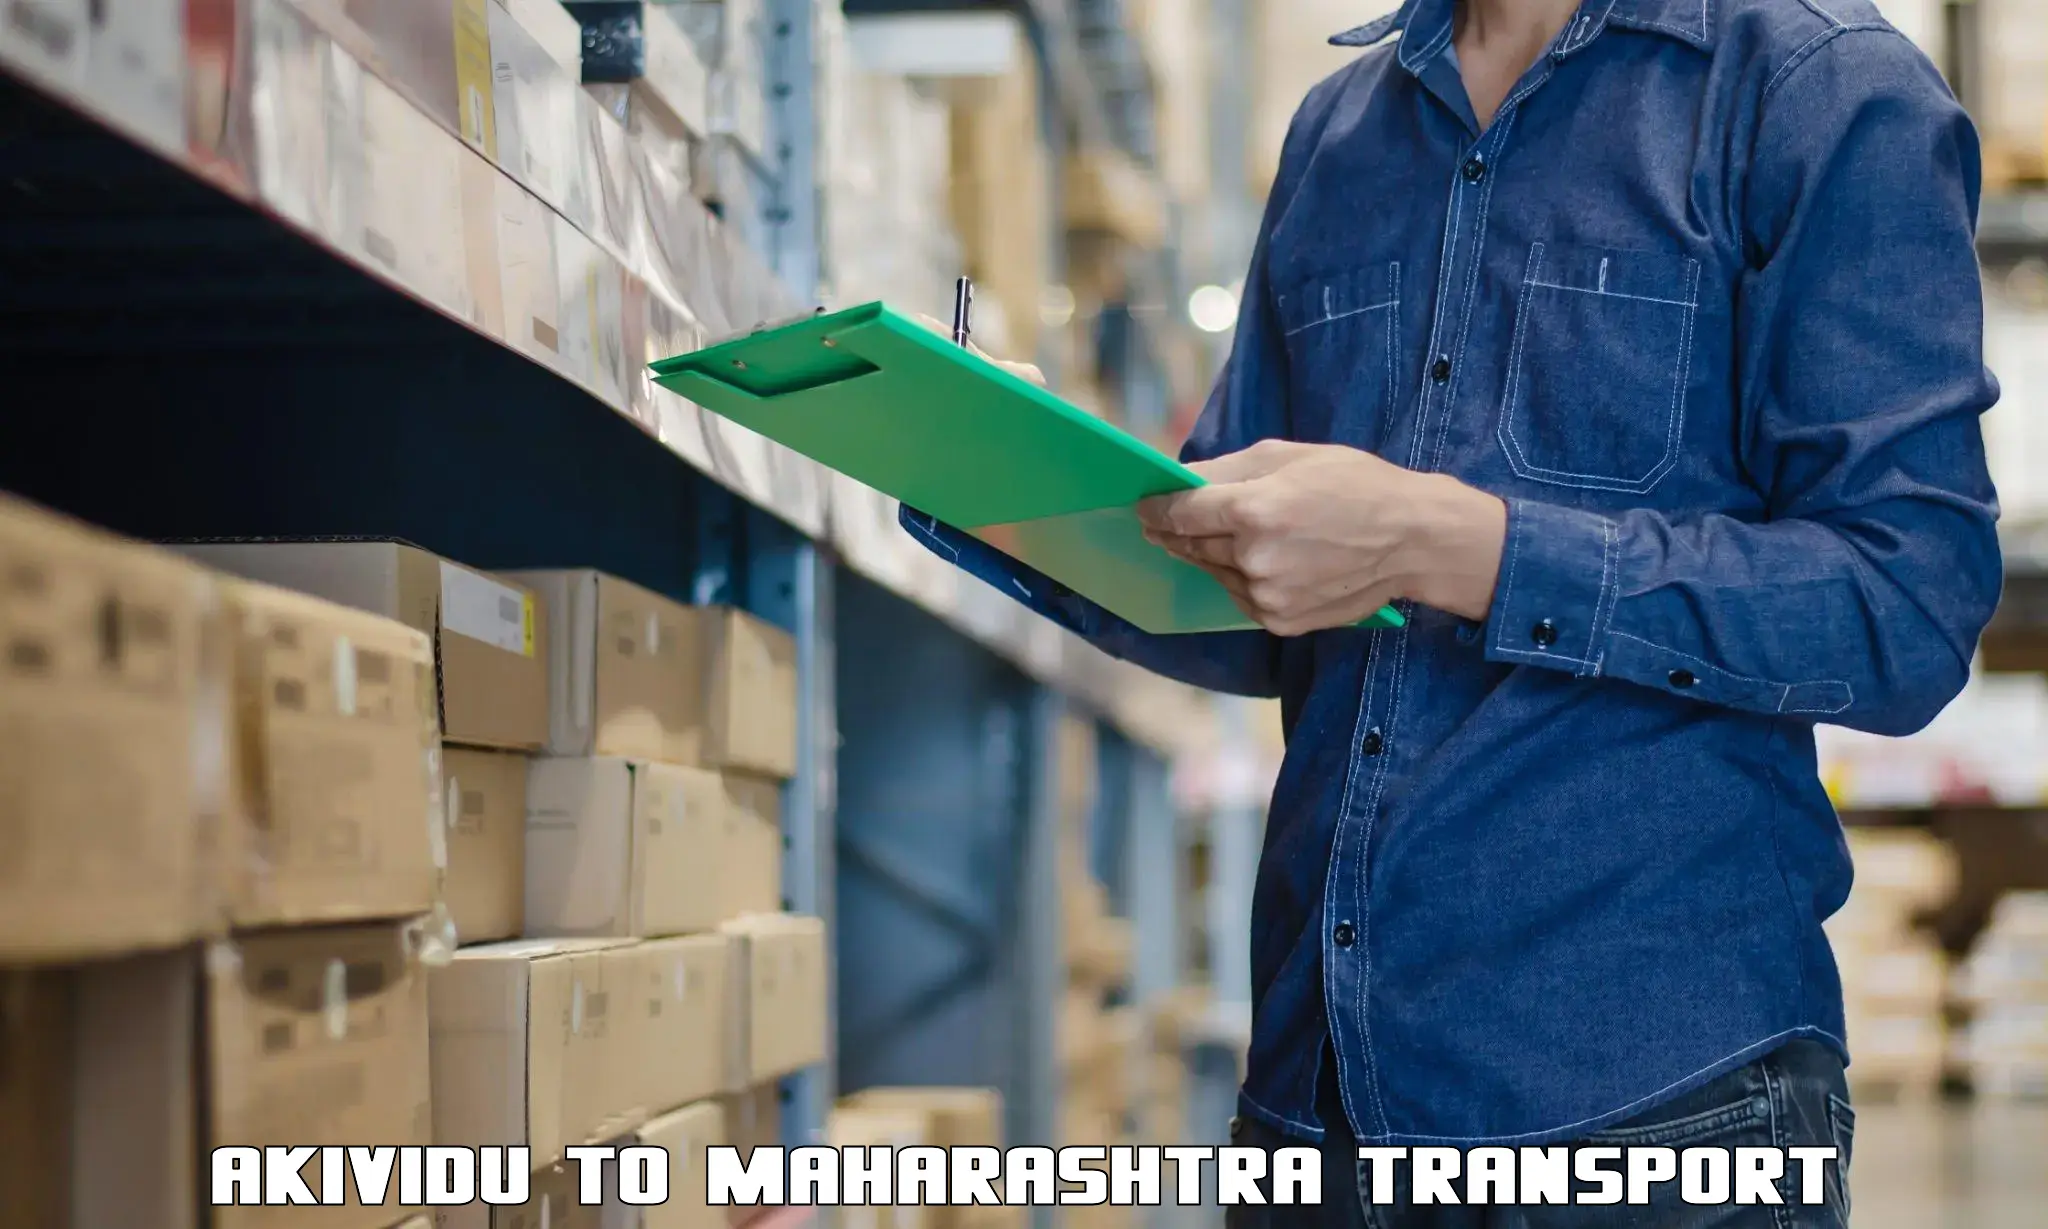 Transport in sharing Akividu to Maharashtra